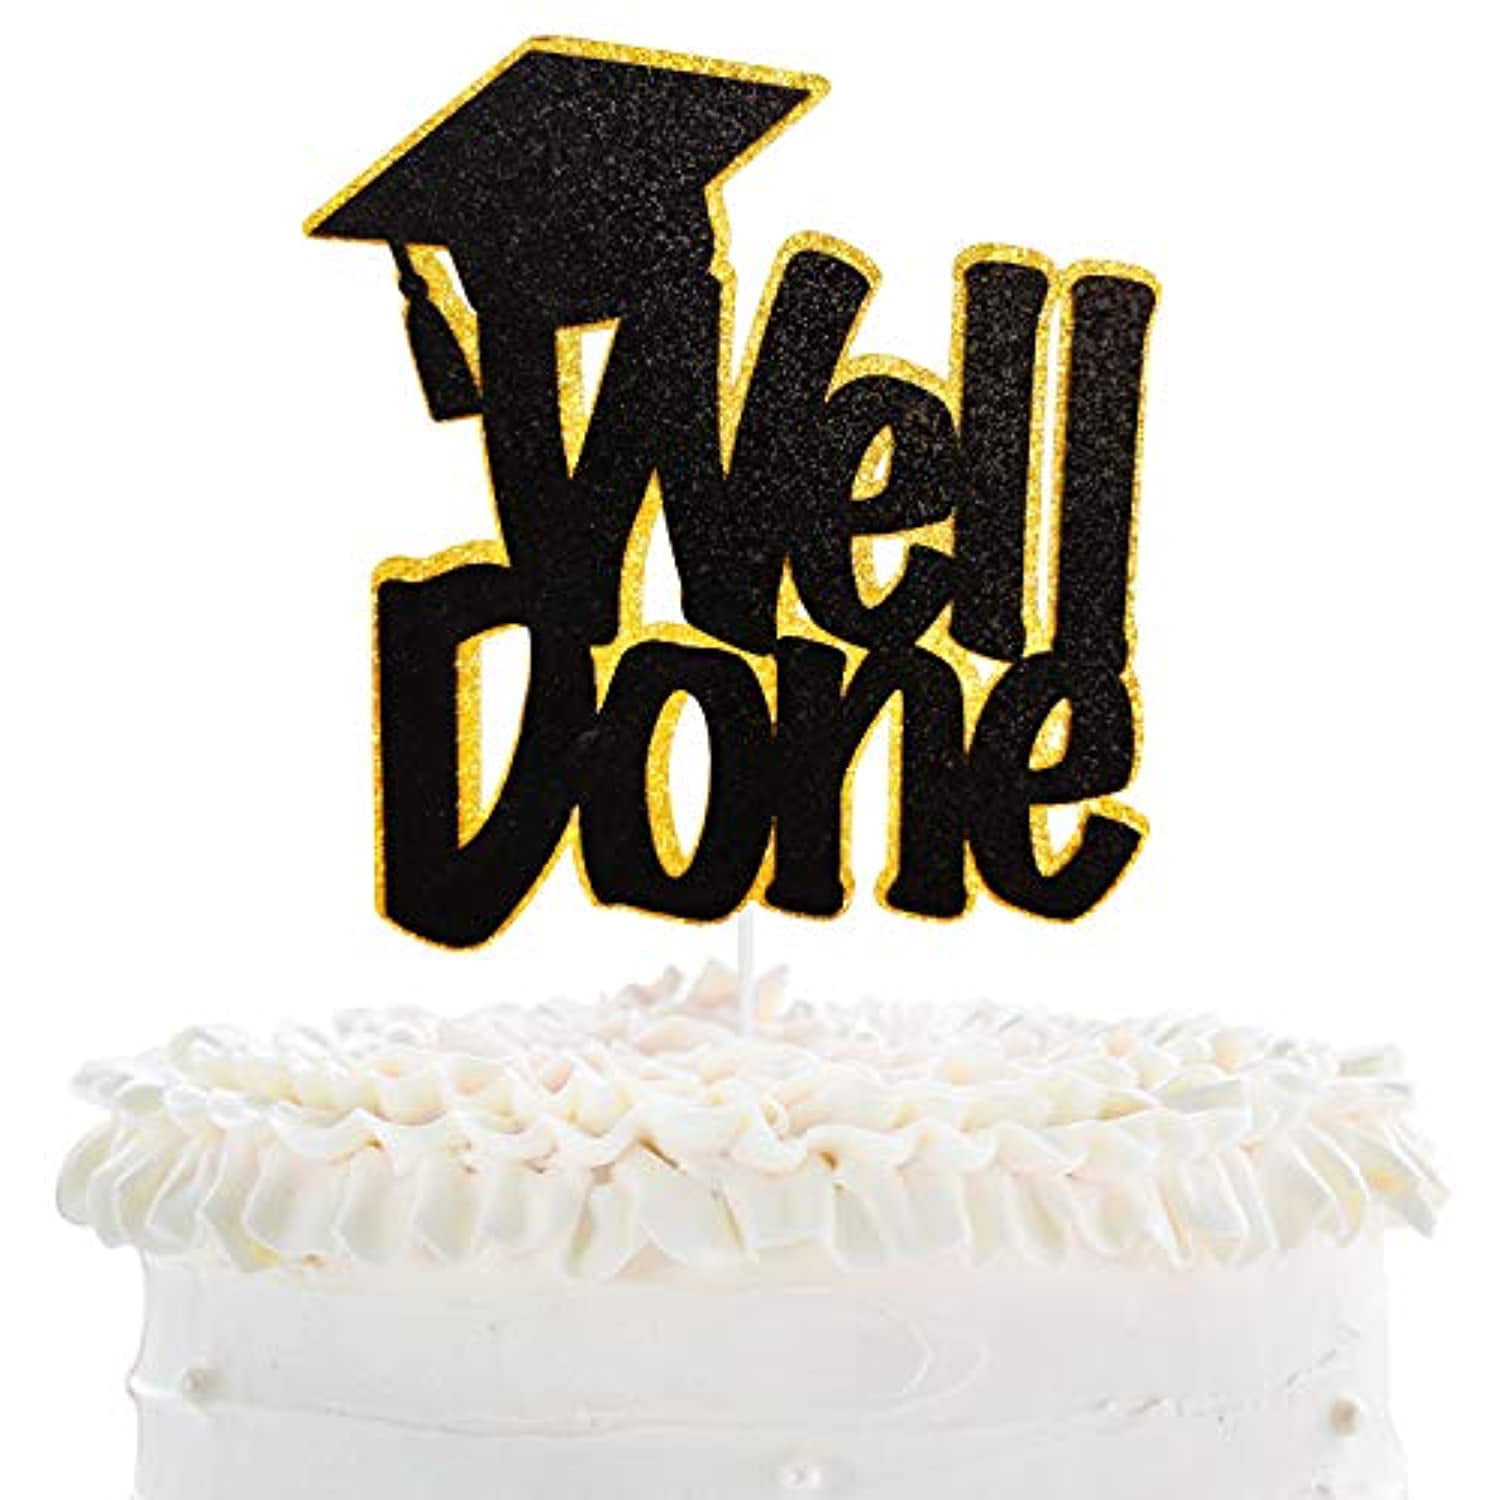 College Graduate Cake Topper Black Awyjcas 2019 Congrats Grad Cake Topper Class of 2019 Graduate Party Decorations Supplies High School Graduation 